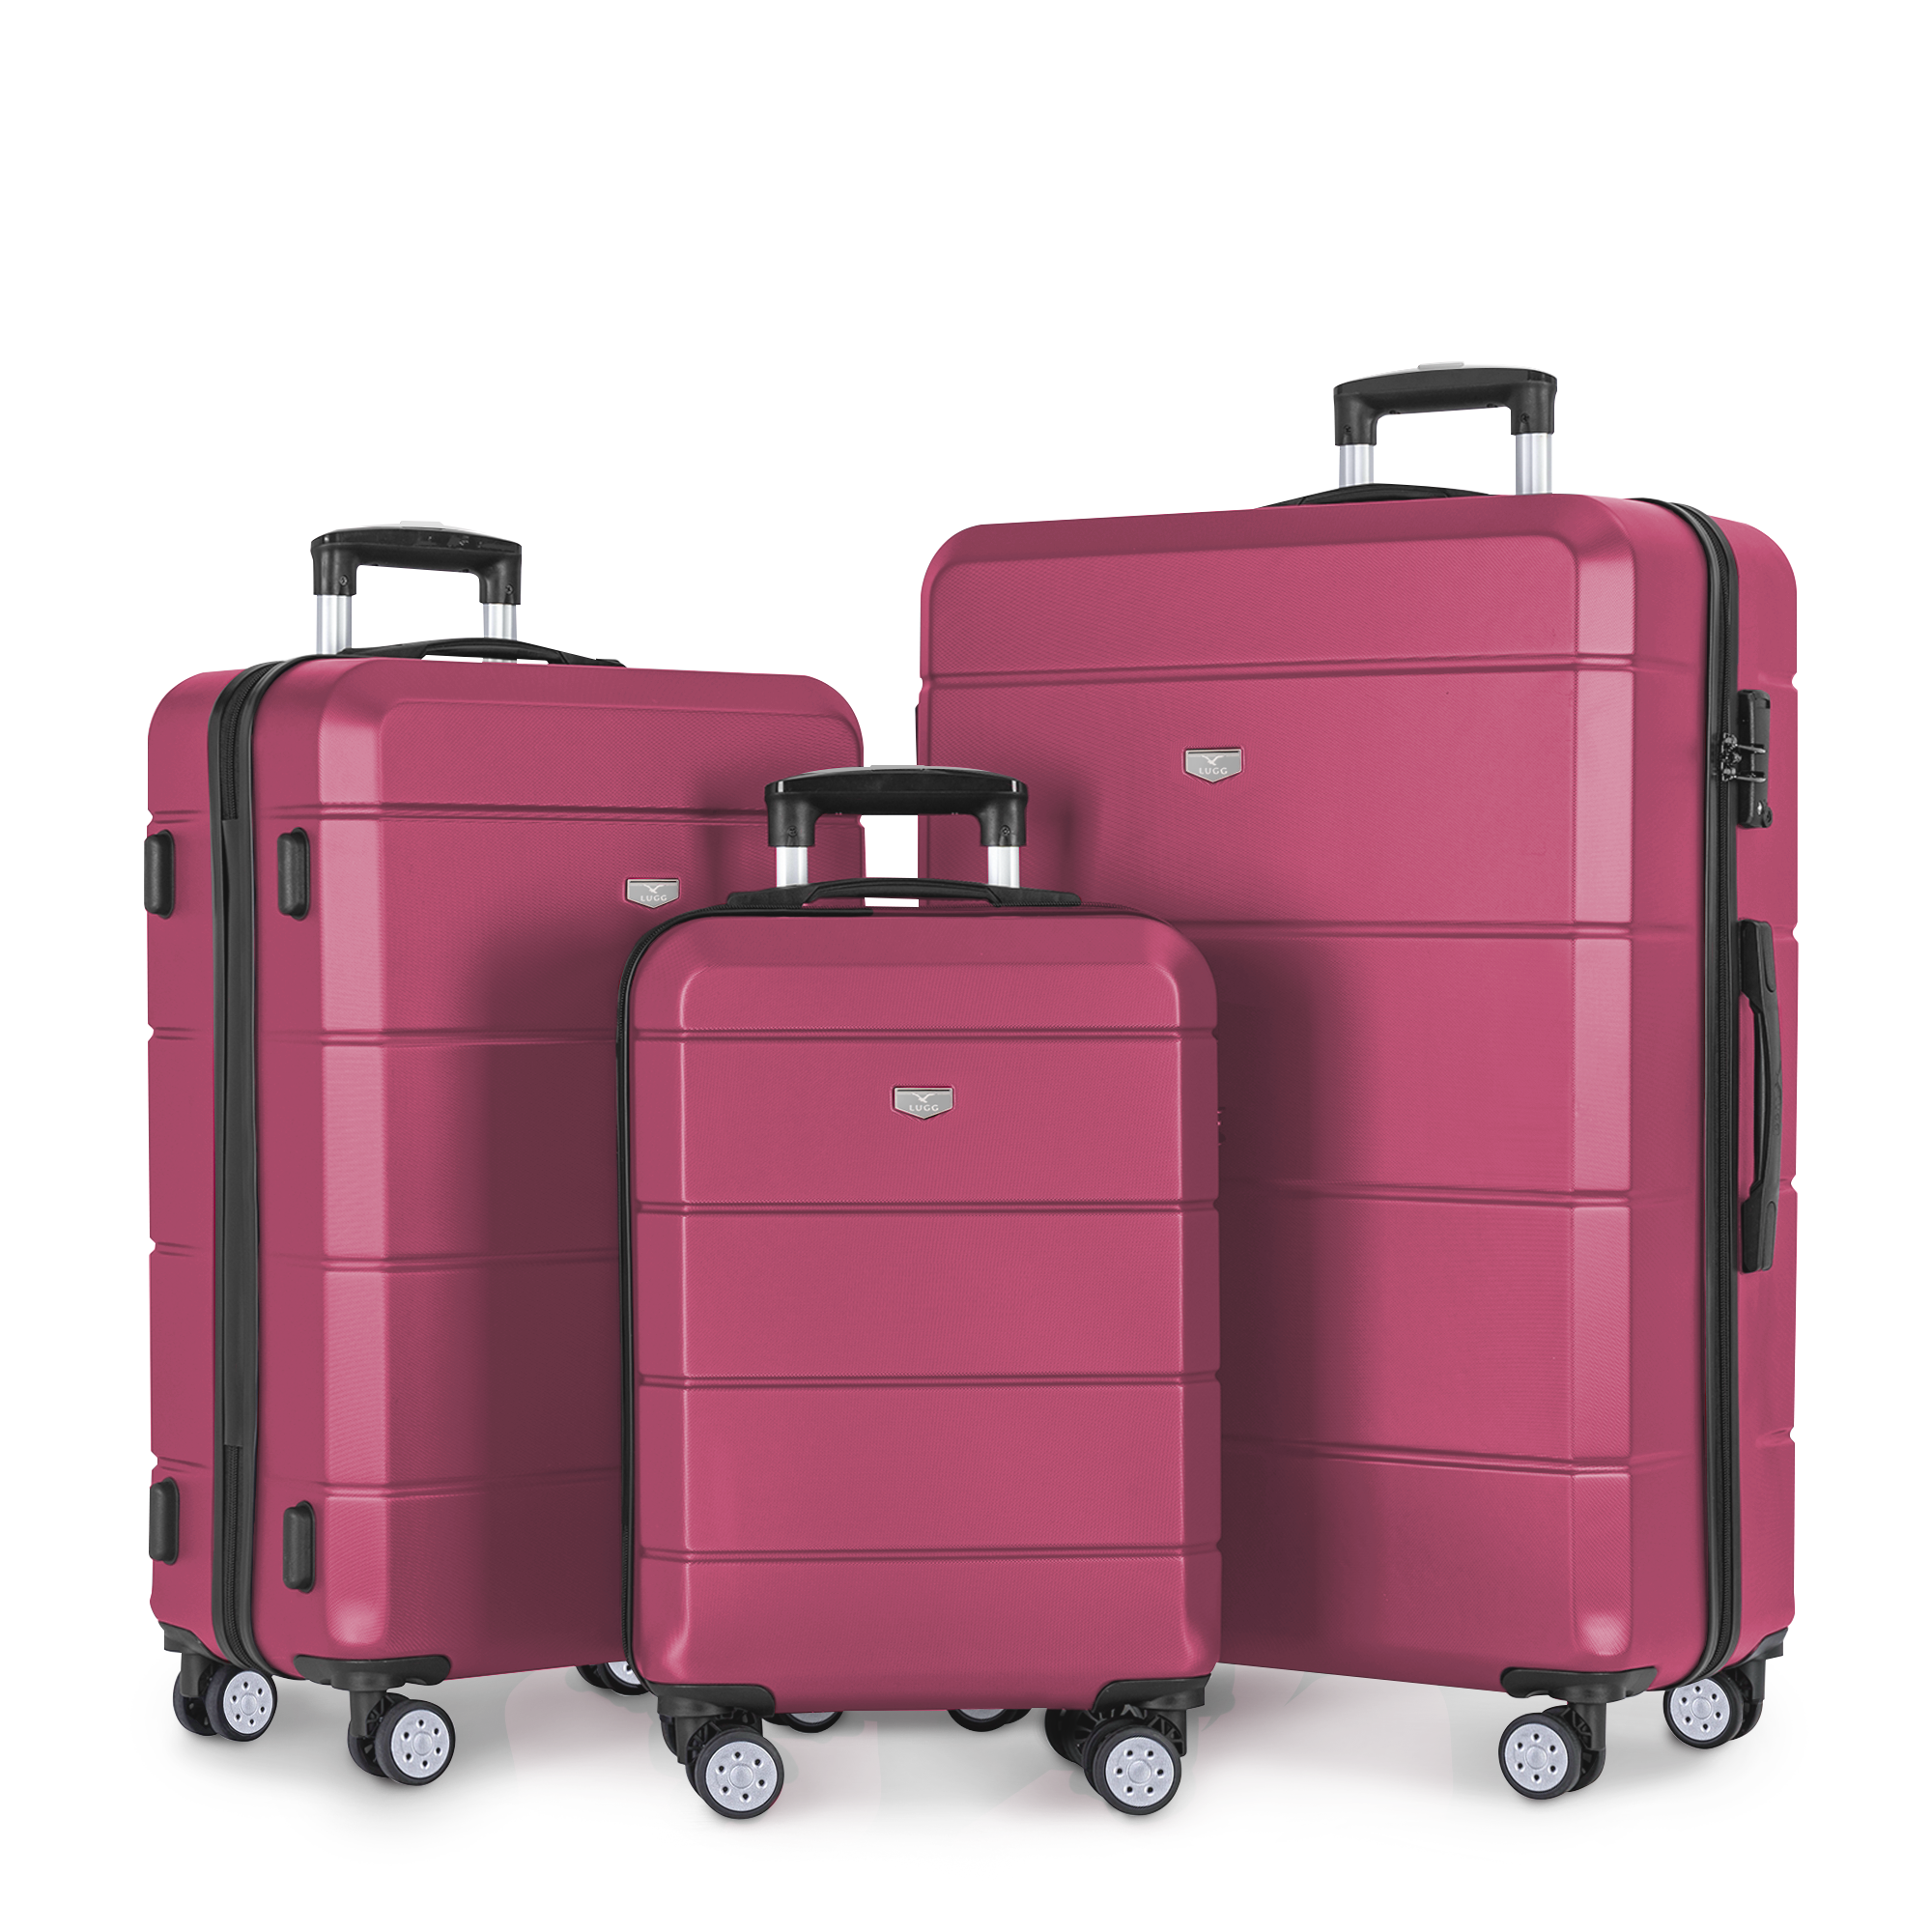 Jetset 3pc Suitcase Set in Burgundy